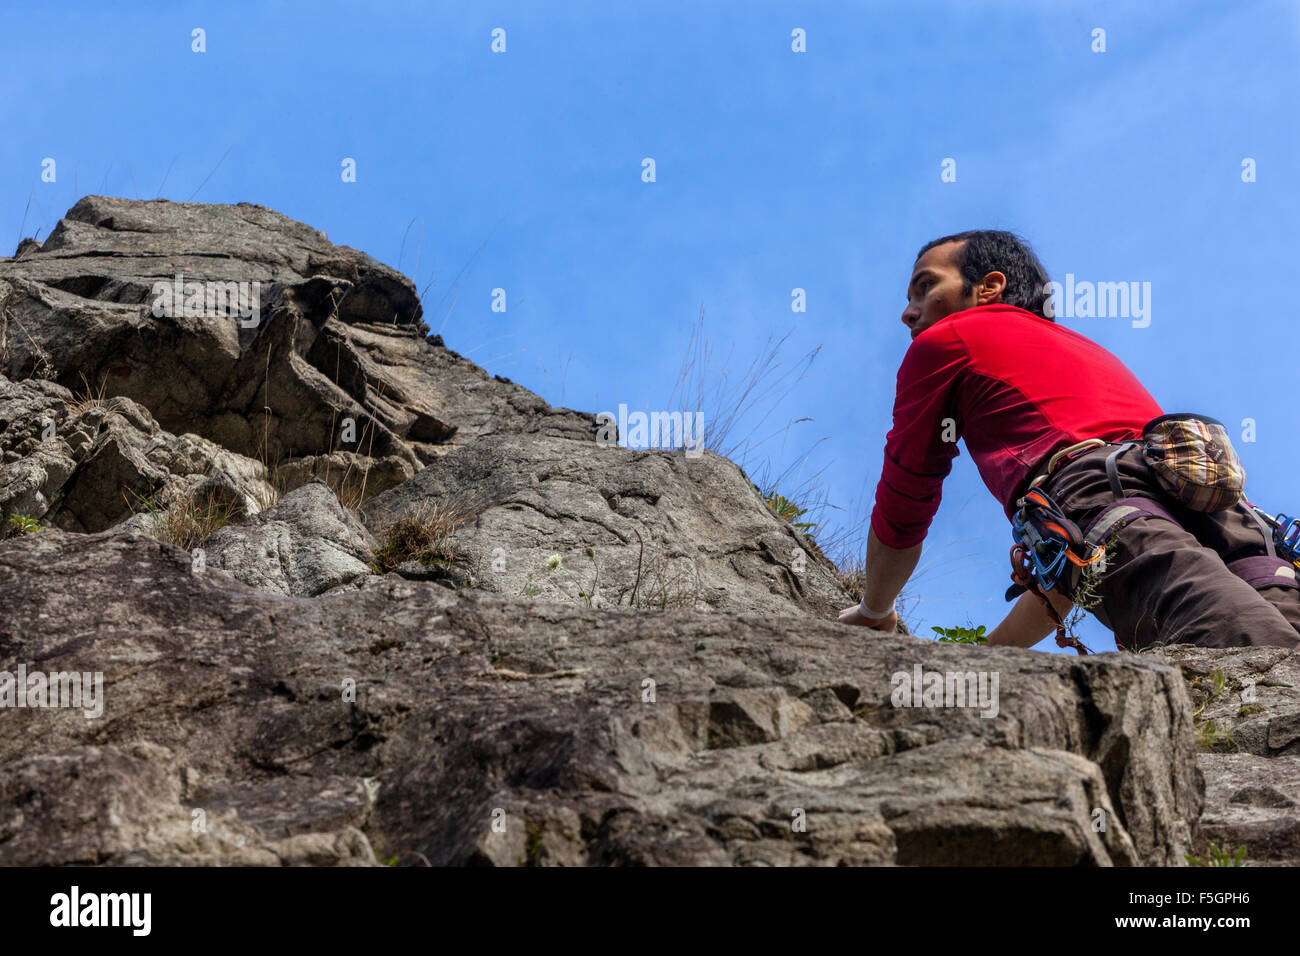 Man, Climber climbing up the rock face, Czech Republic Stock Photo